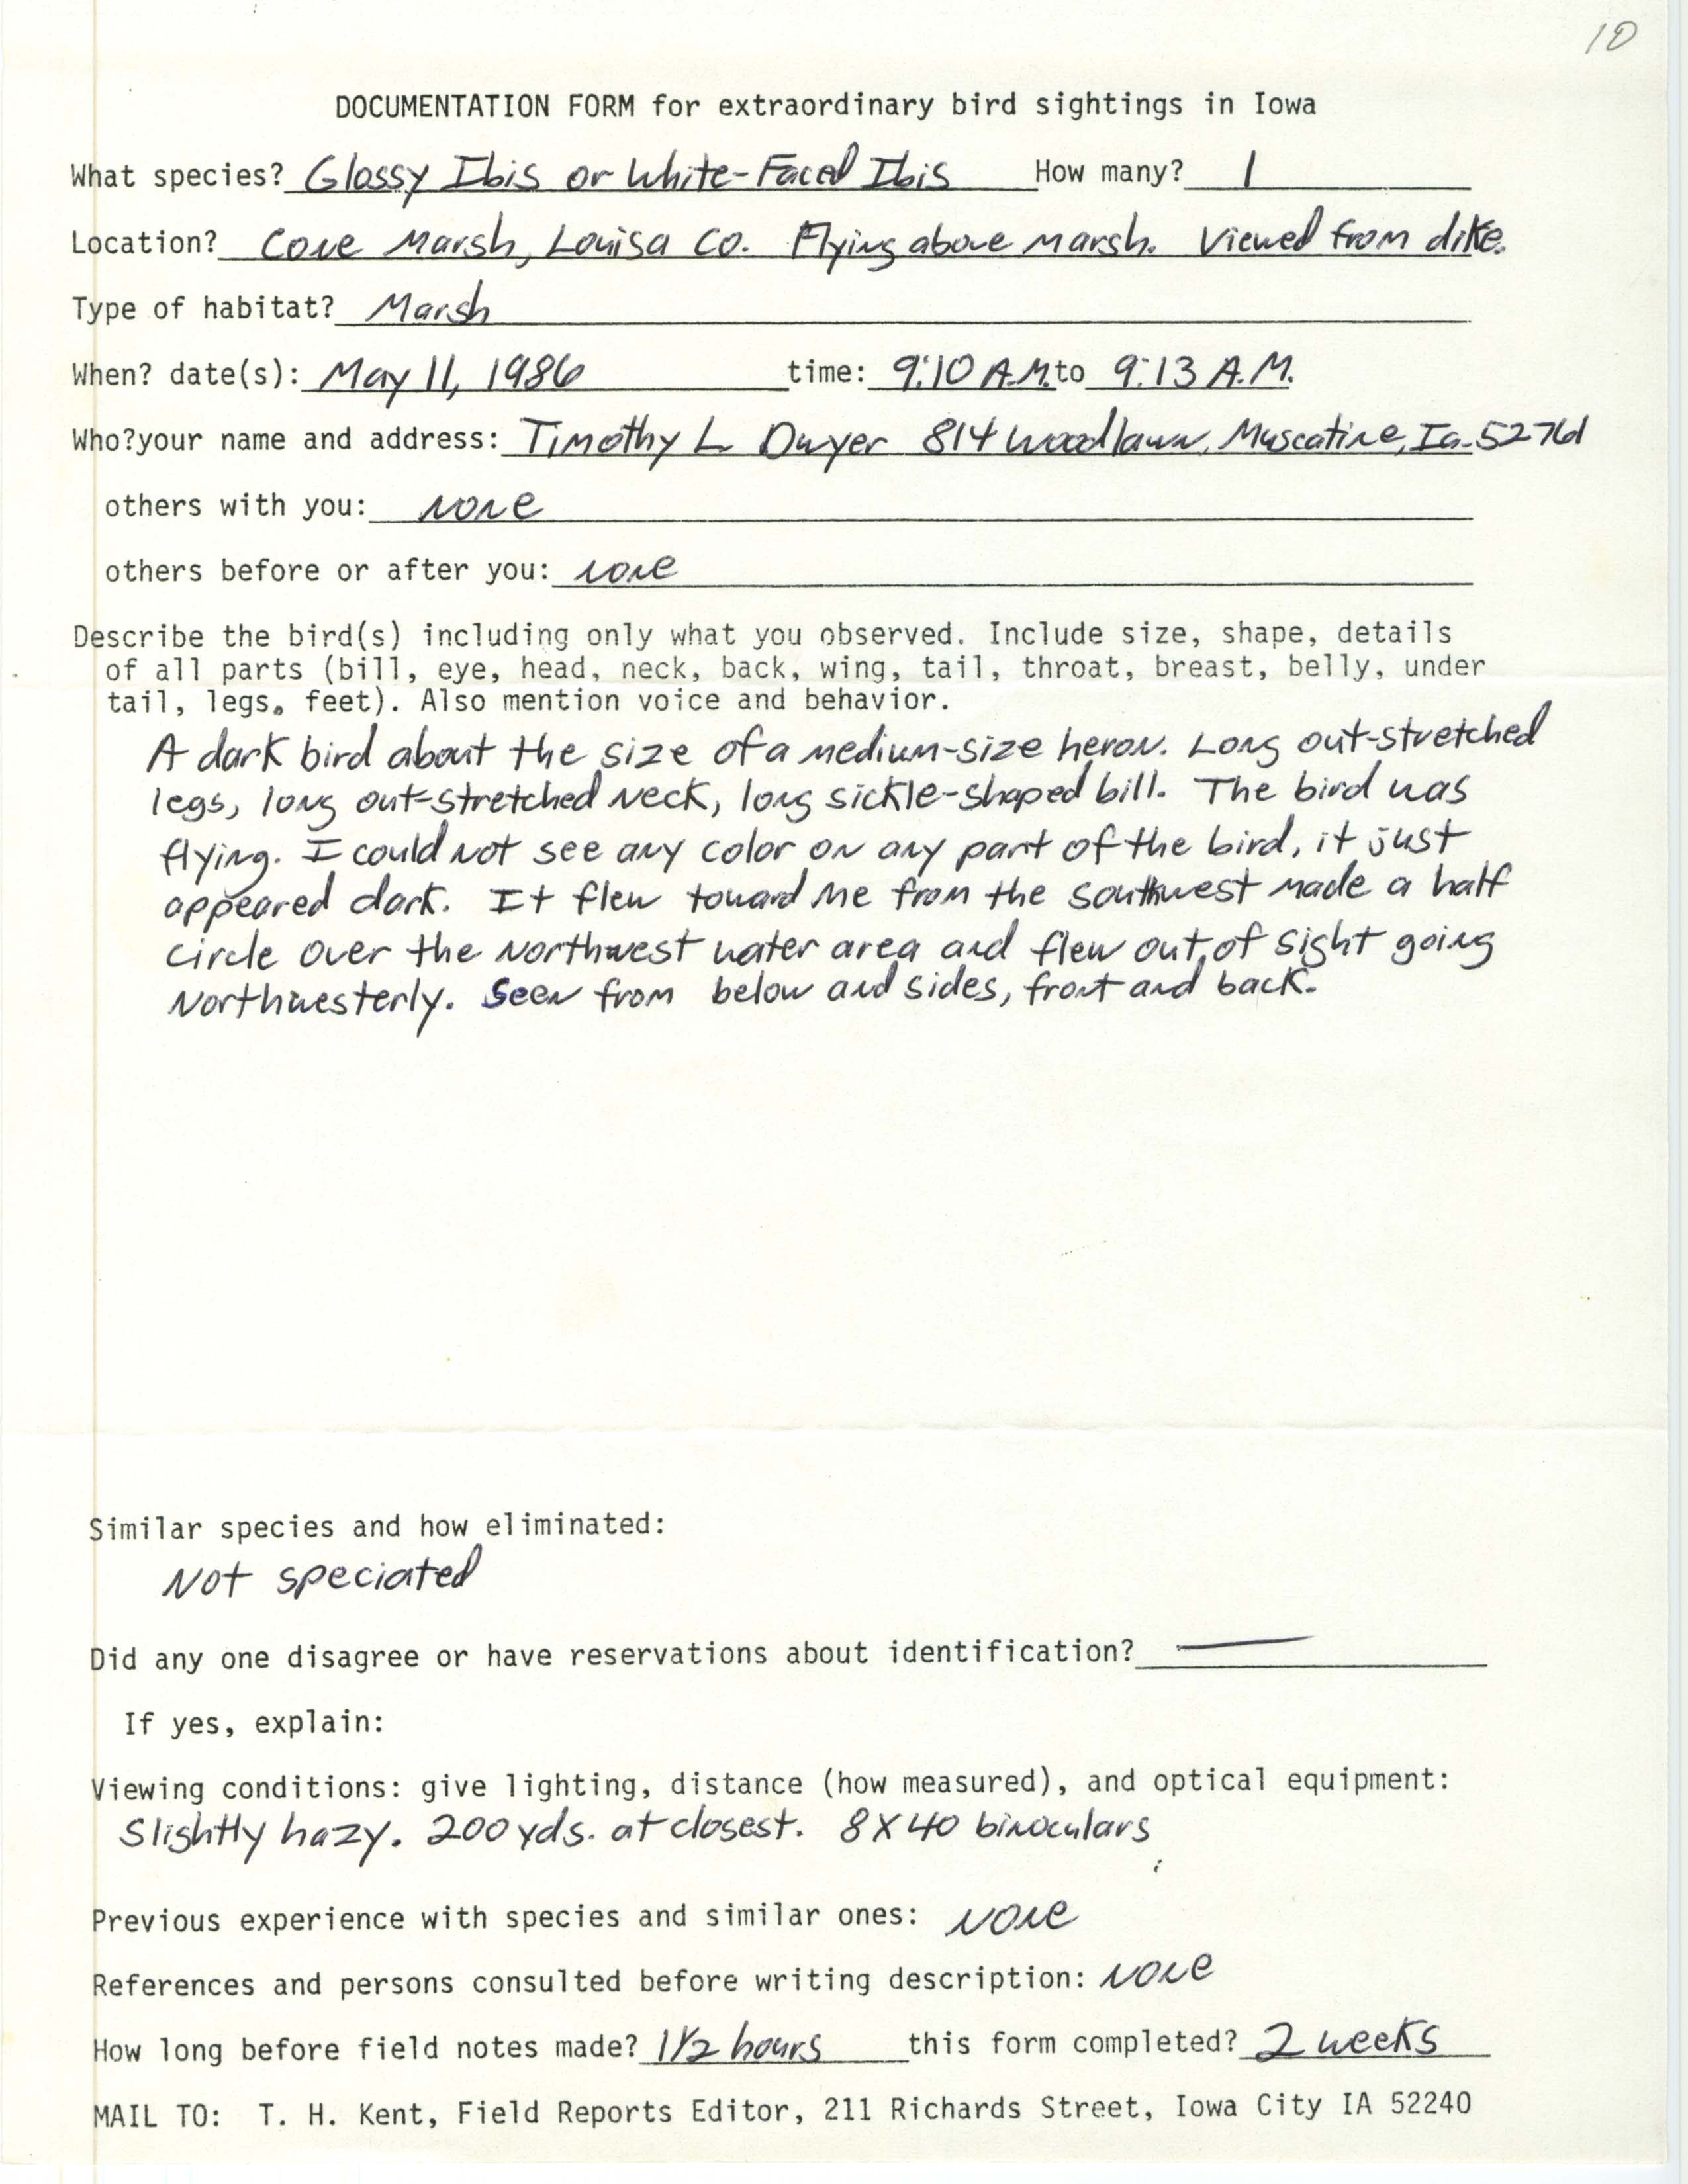 Rare bird documentation form for Ibis species at Cone Marsh, 1986